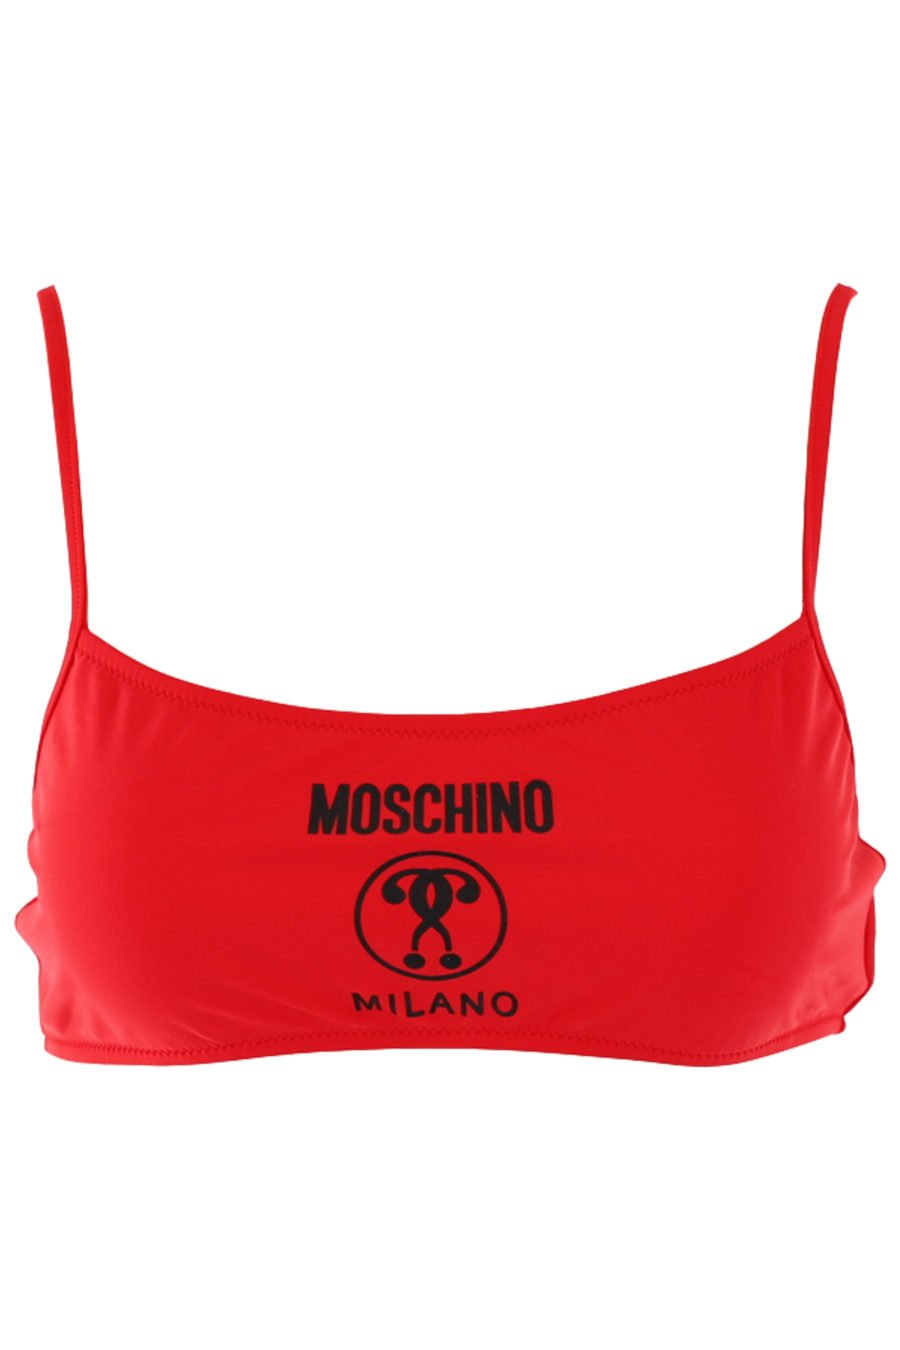 Top de bikini recto rojo con logo doble pregunta negro - IMG 0765